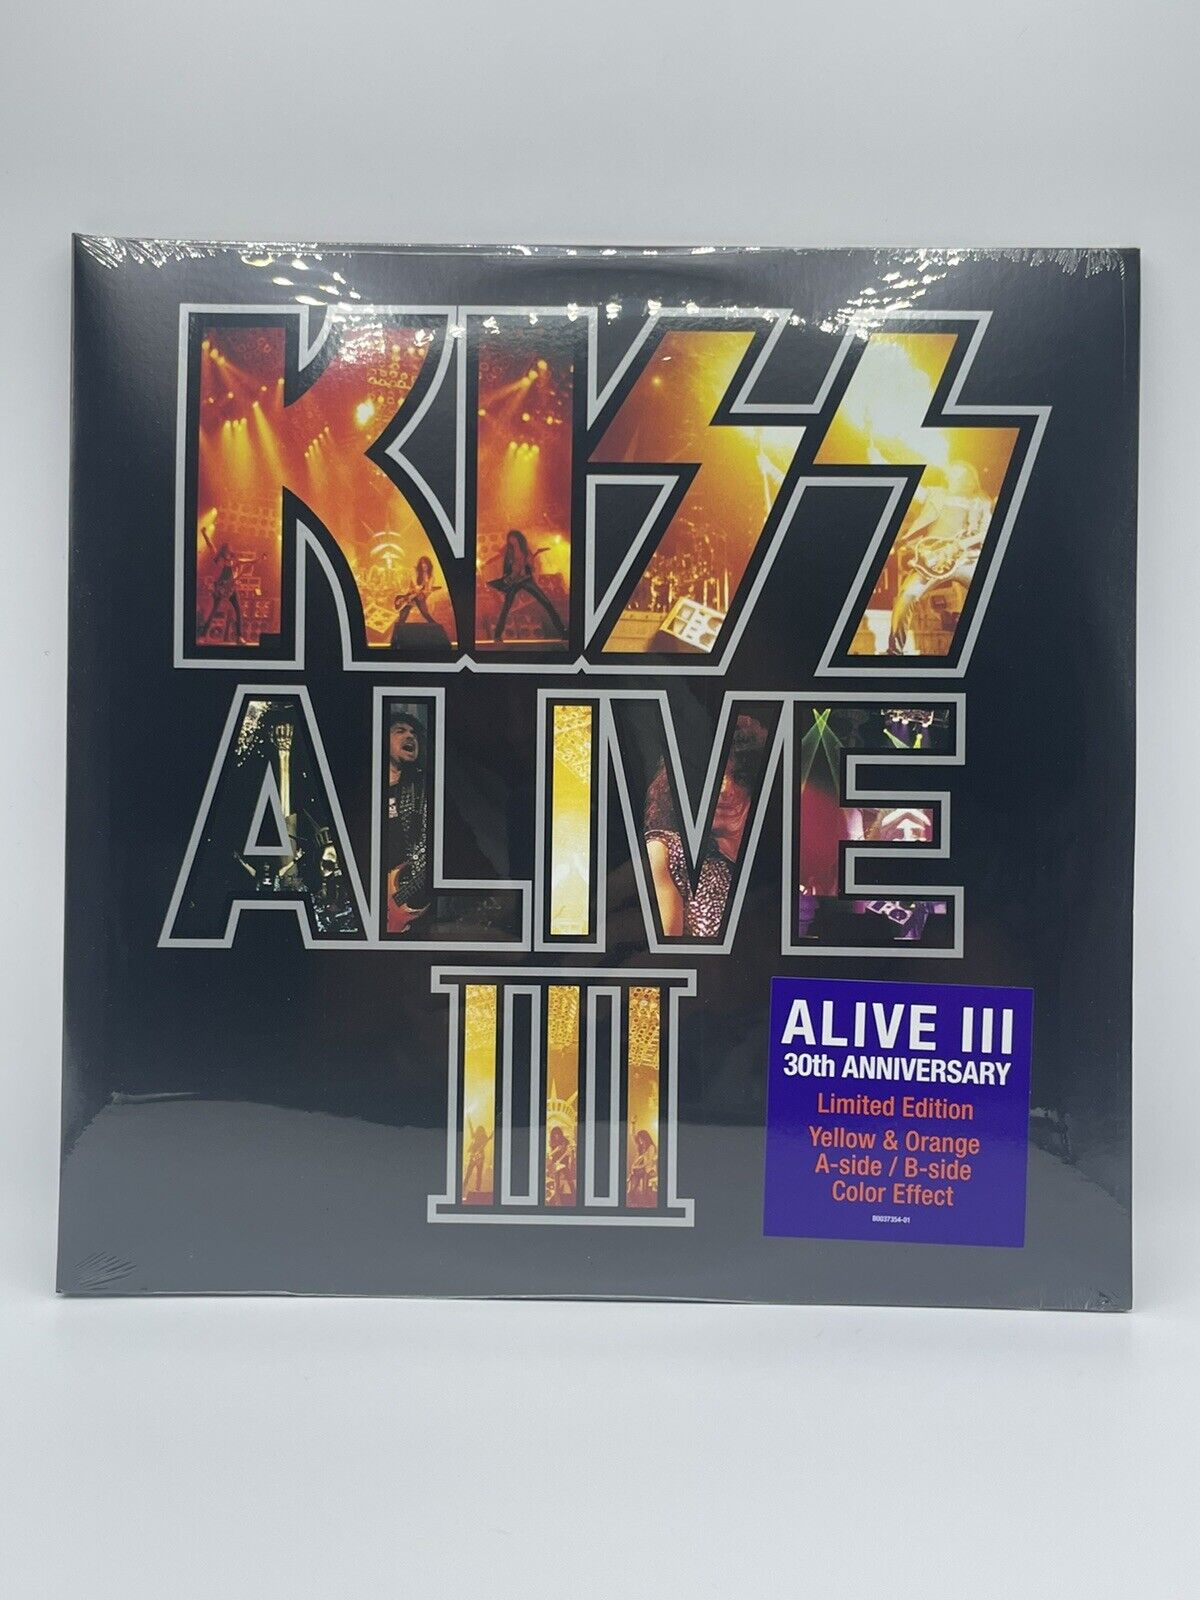 NEW KISS ALIVE III 30th Anniversary Yellow And Orange Color Vinyl LP Record 3